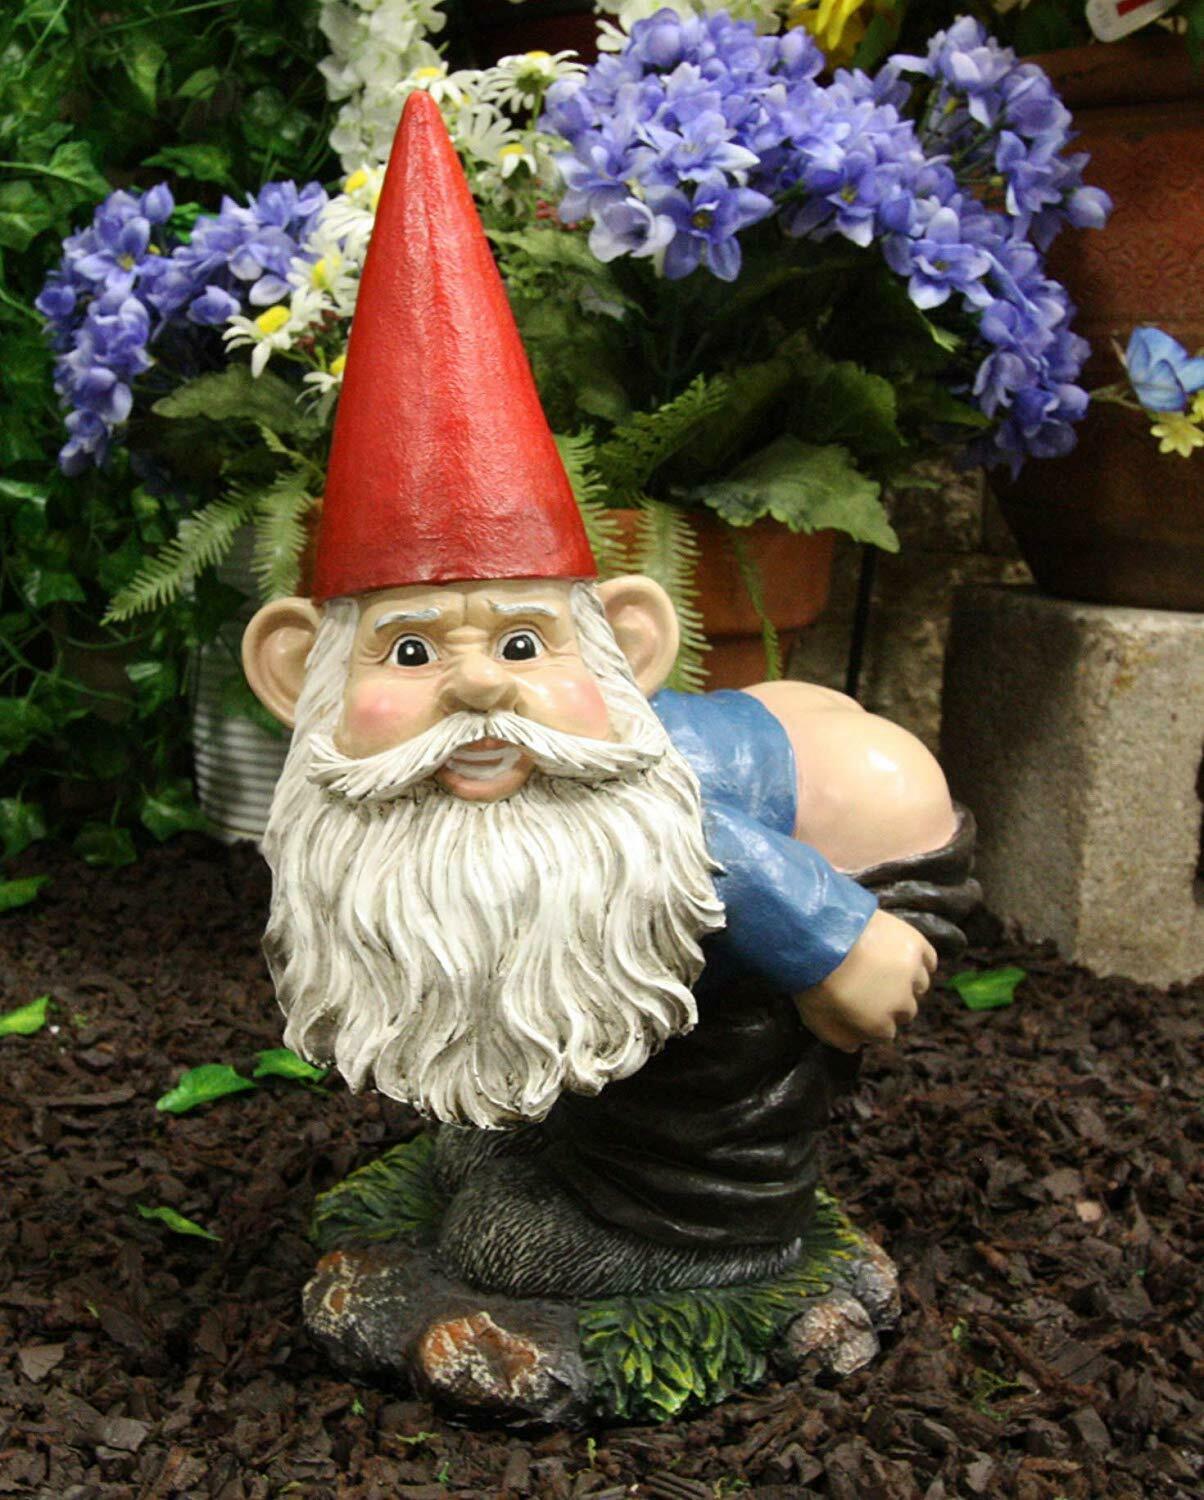 13.5"H Large Naughty Fun Prank Bare Butts Mooning Grumpy Garden Gnome Statue - $75.99